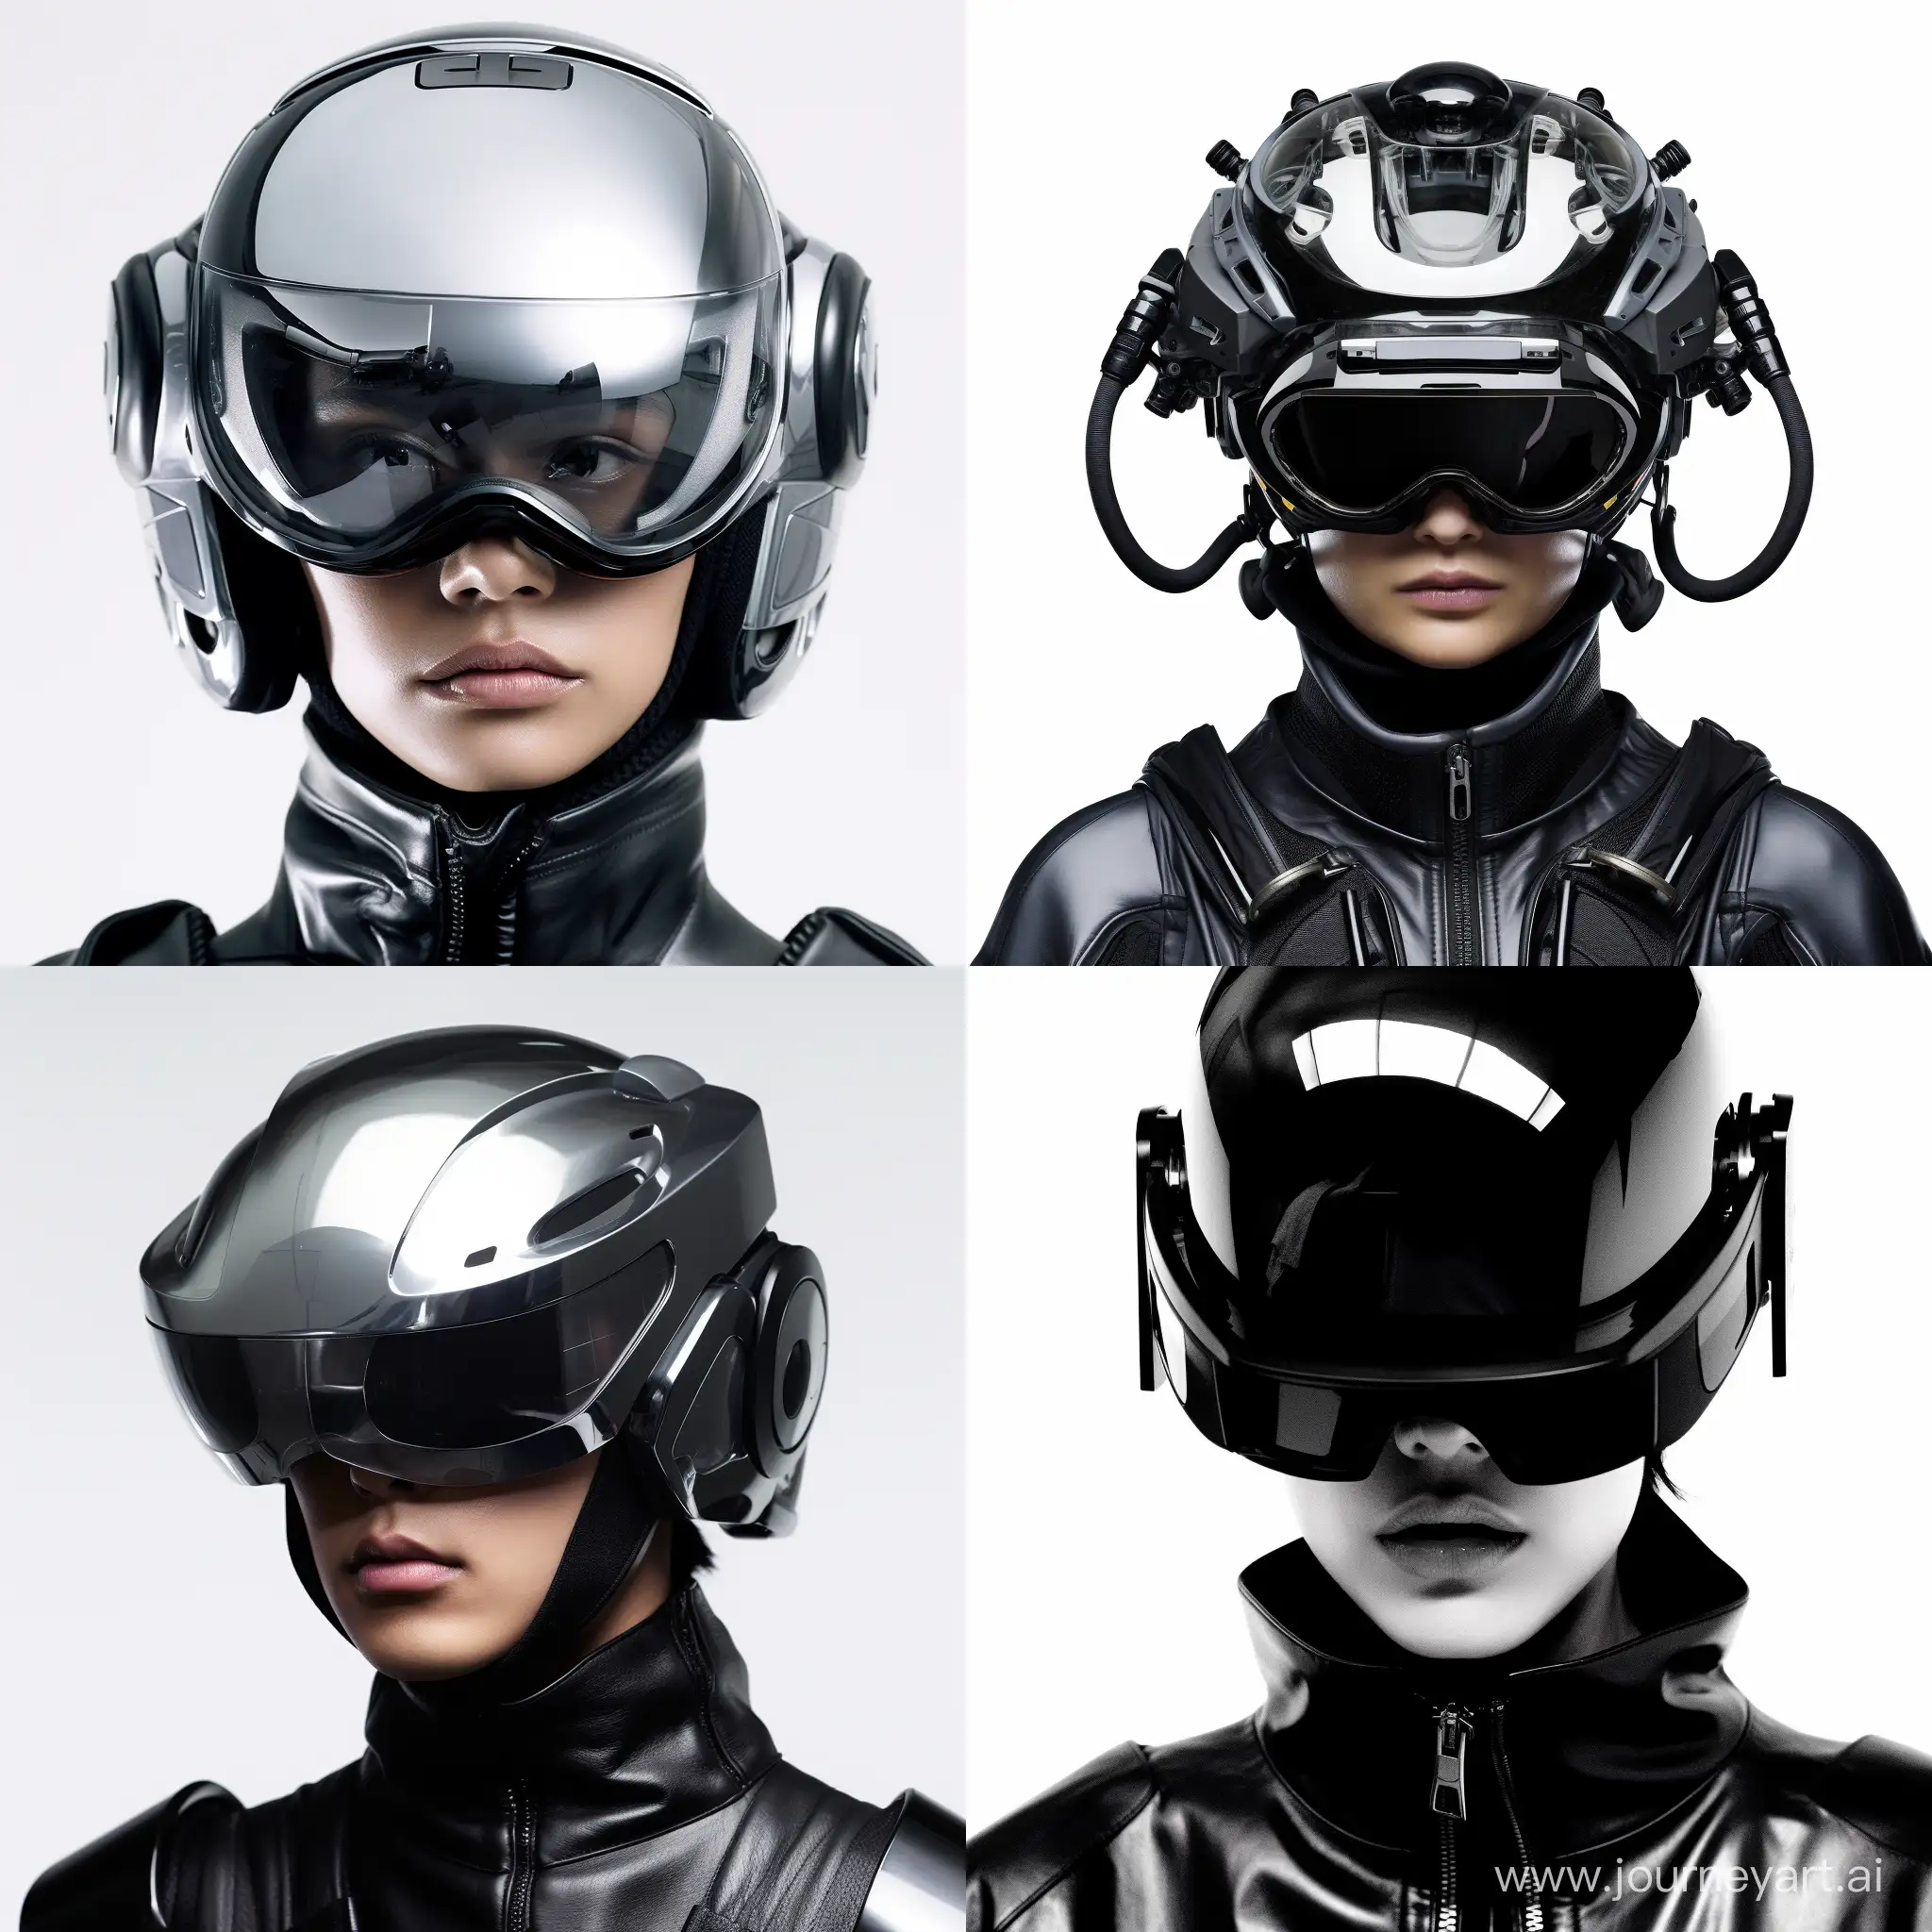 Futuristic-Fashion-Dark-Voluminous-Apparel-with-HighTech-Helmet-and-Anamorphic-Visor